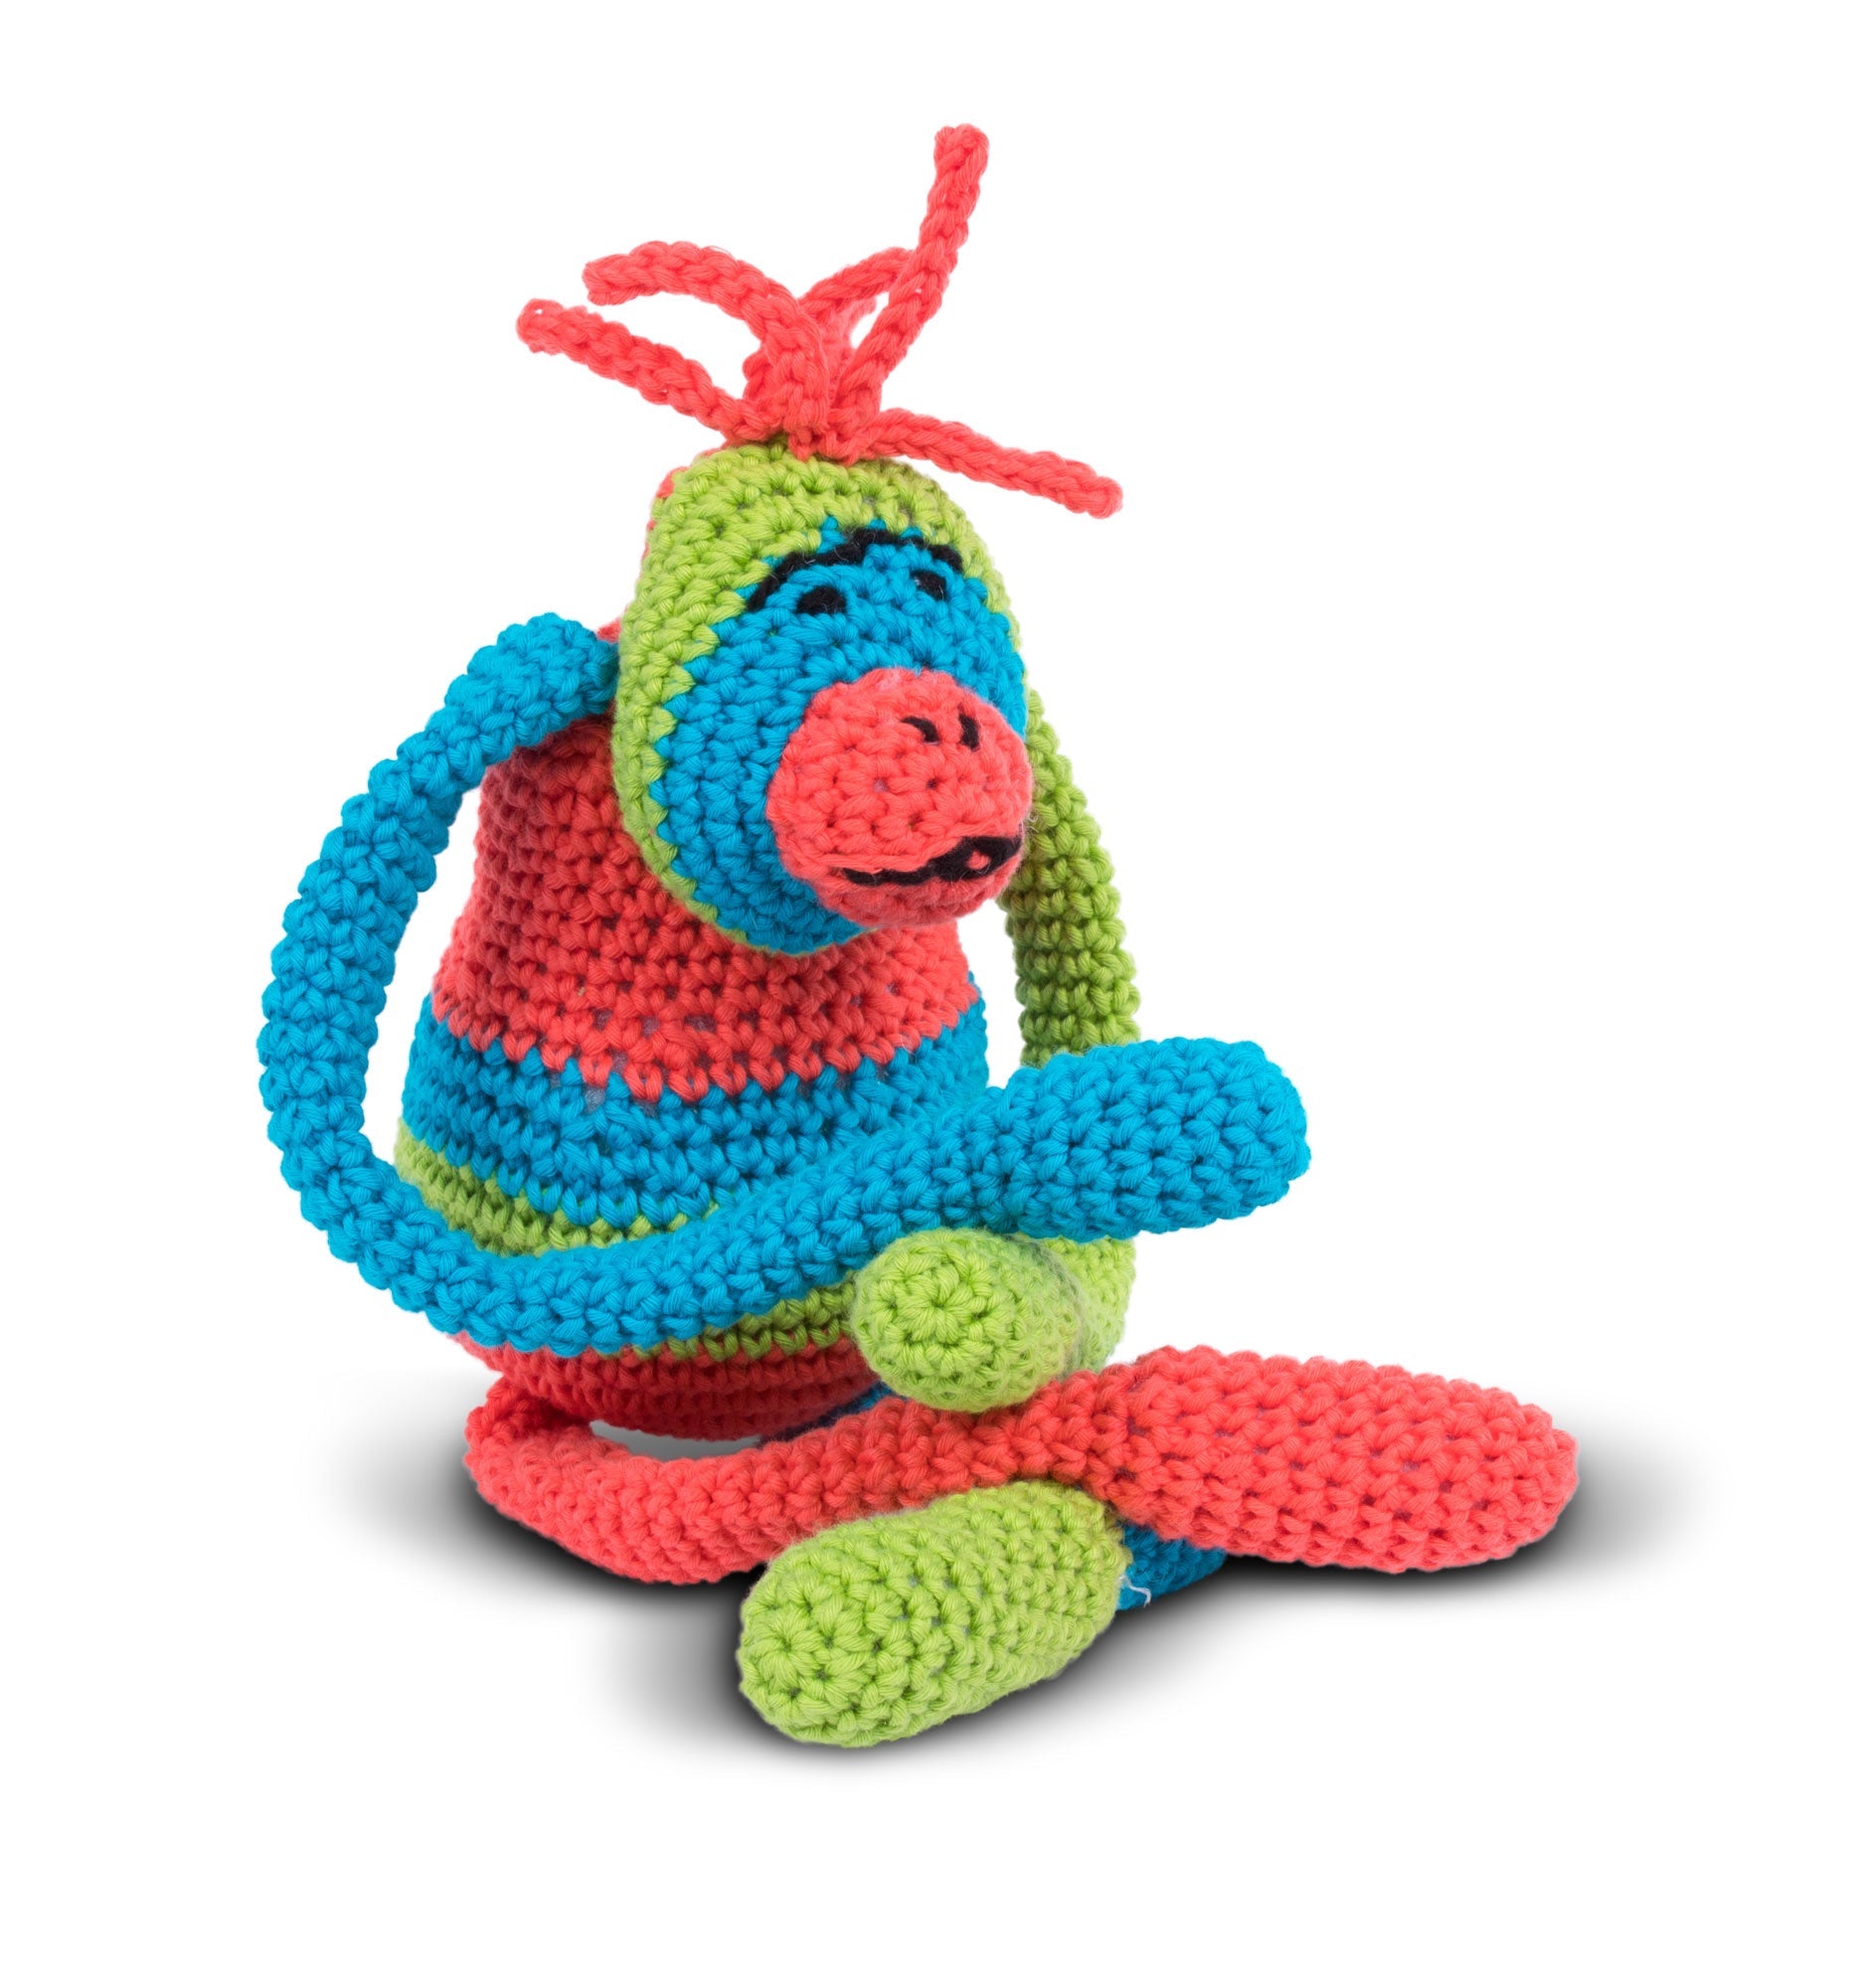 Kit crochet - Pocket Pals